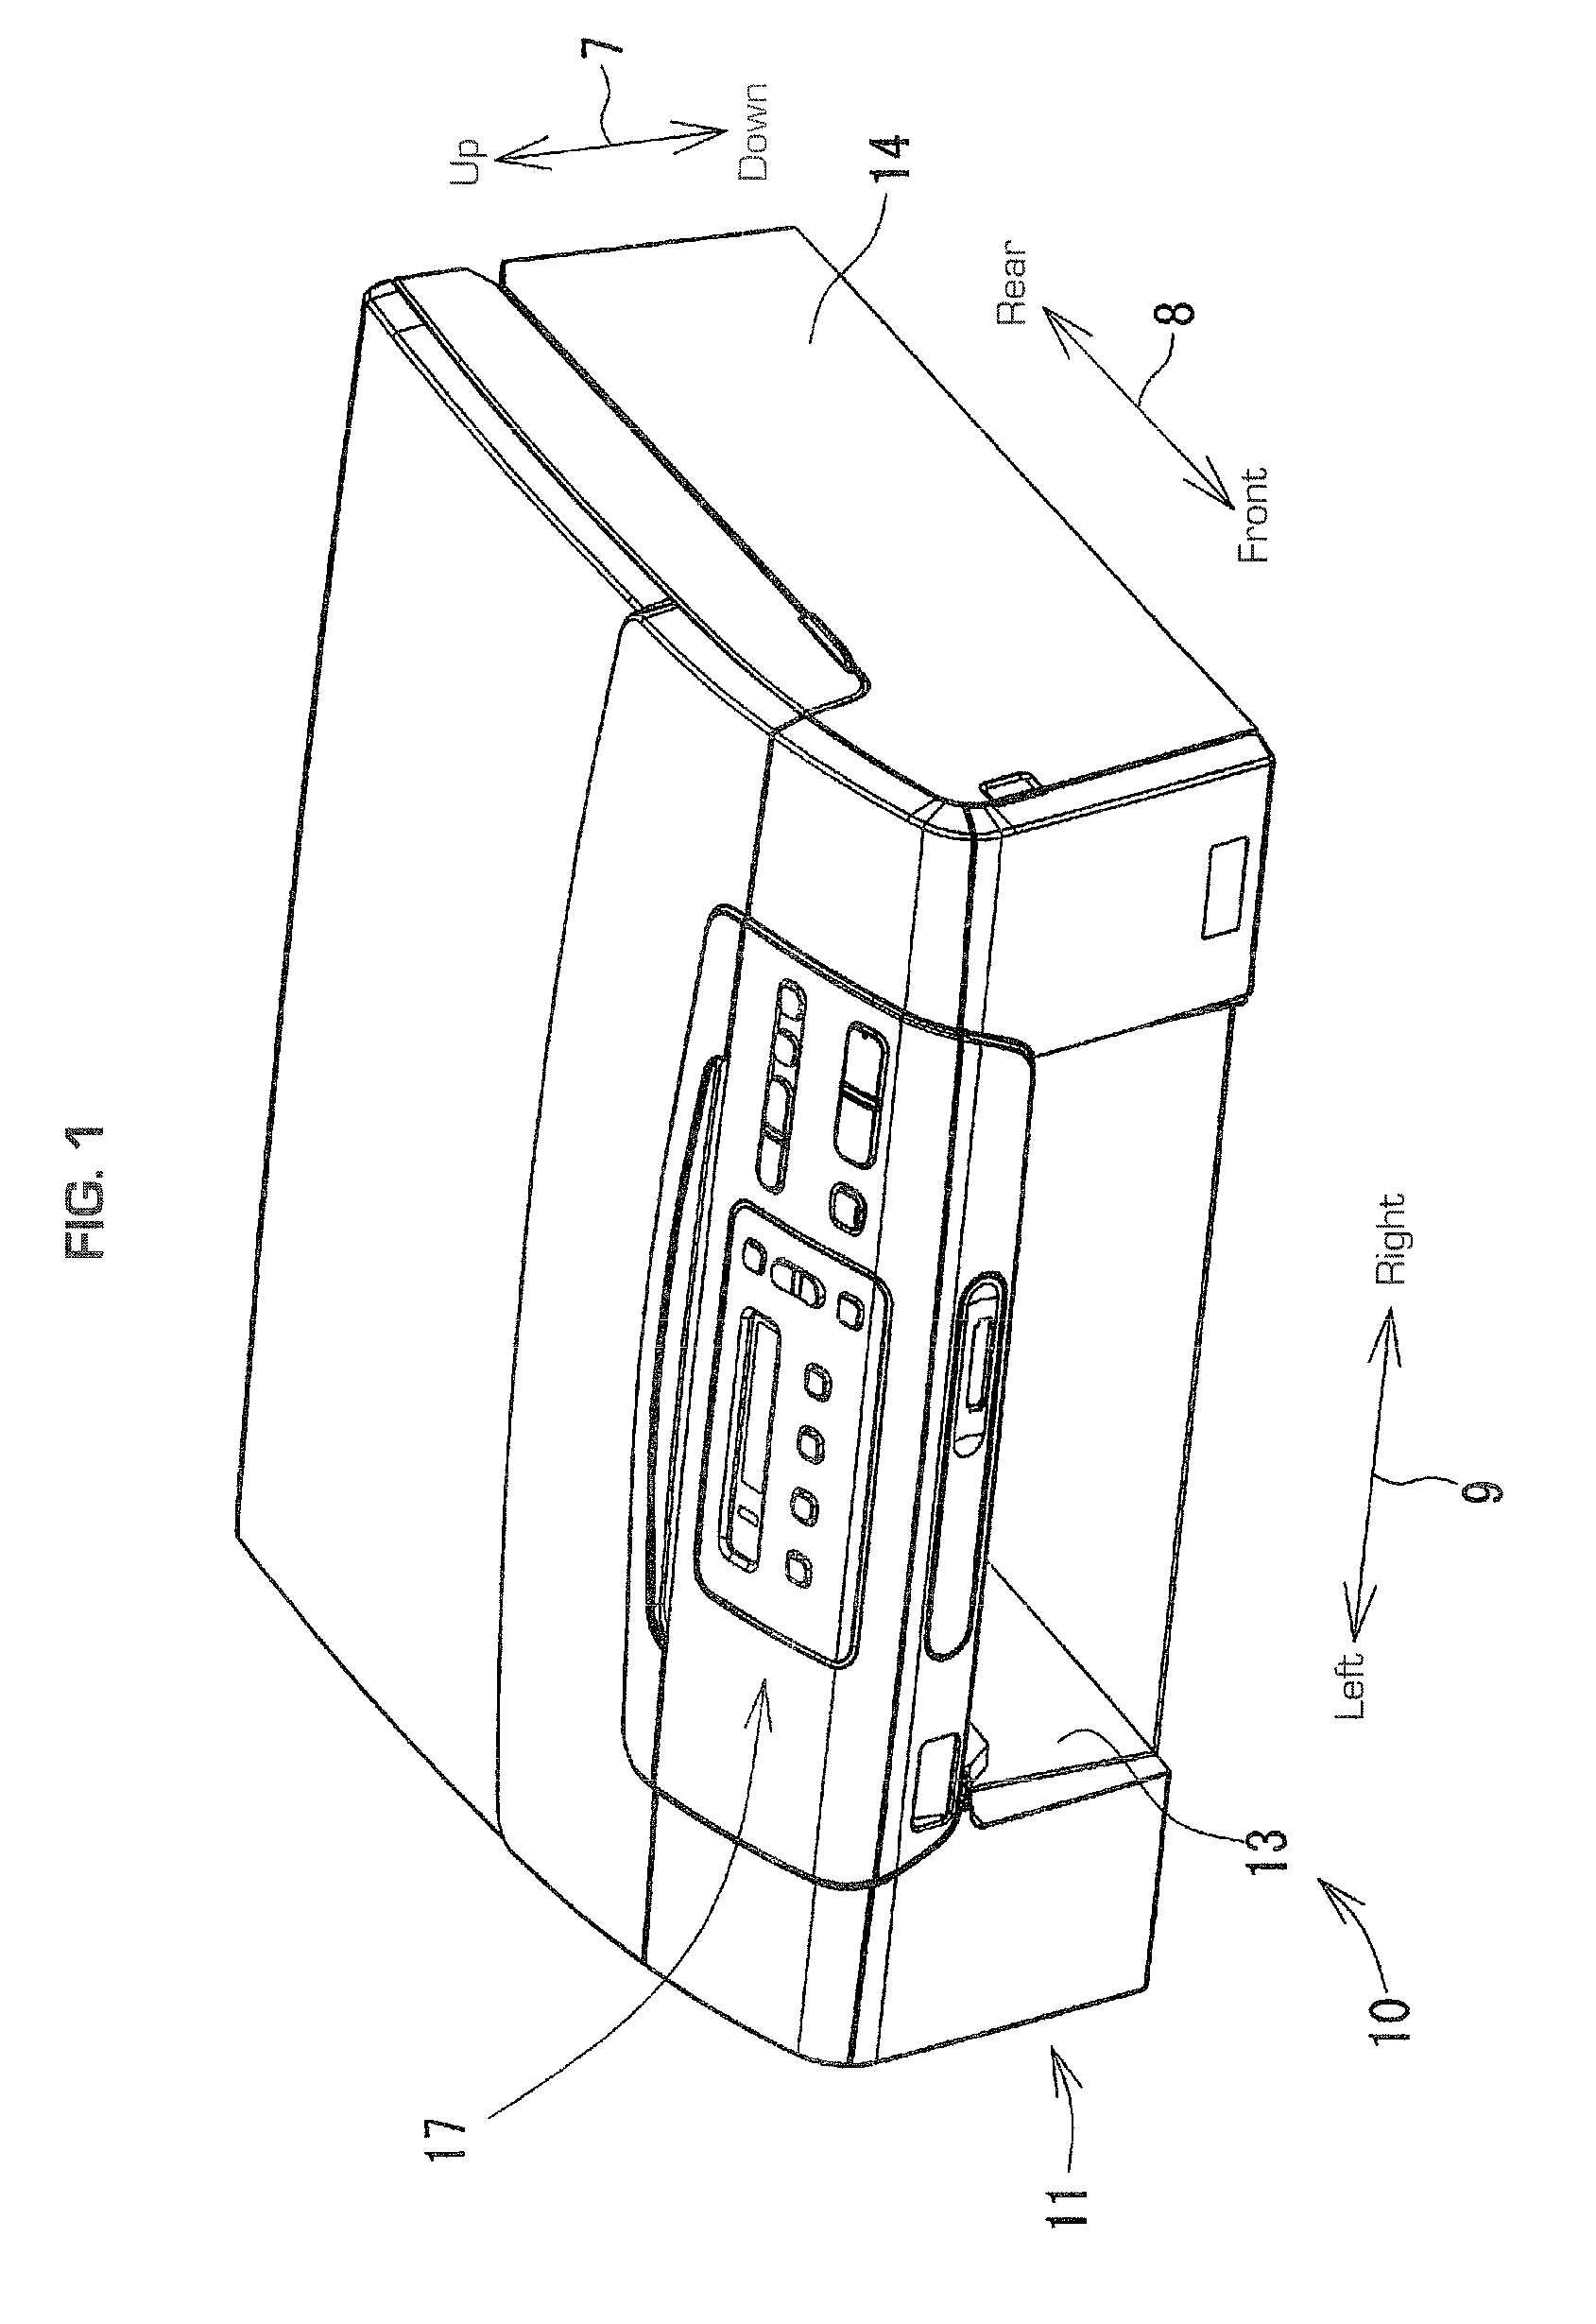 Image recording device